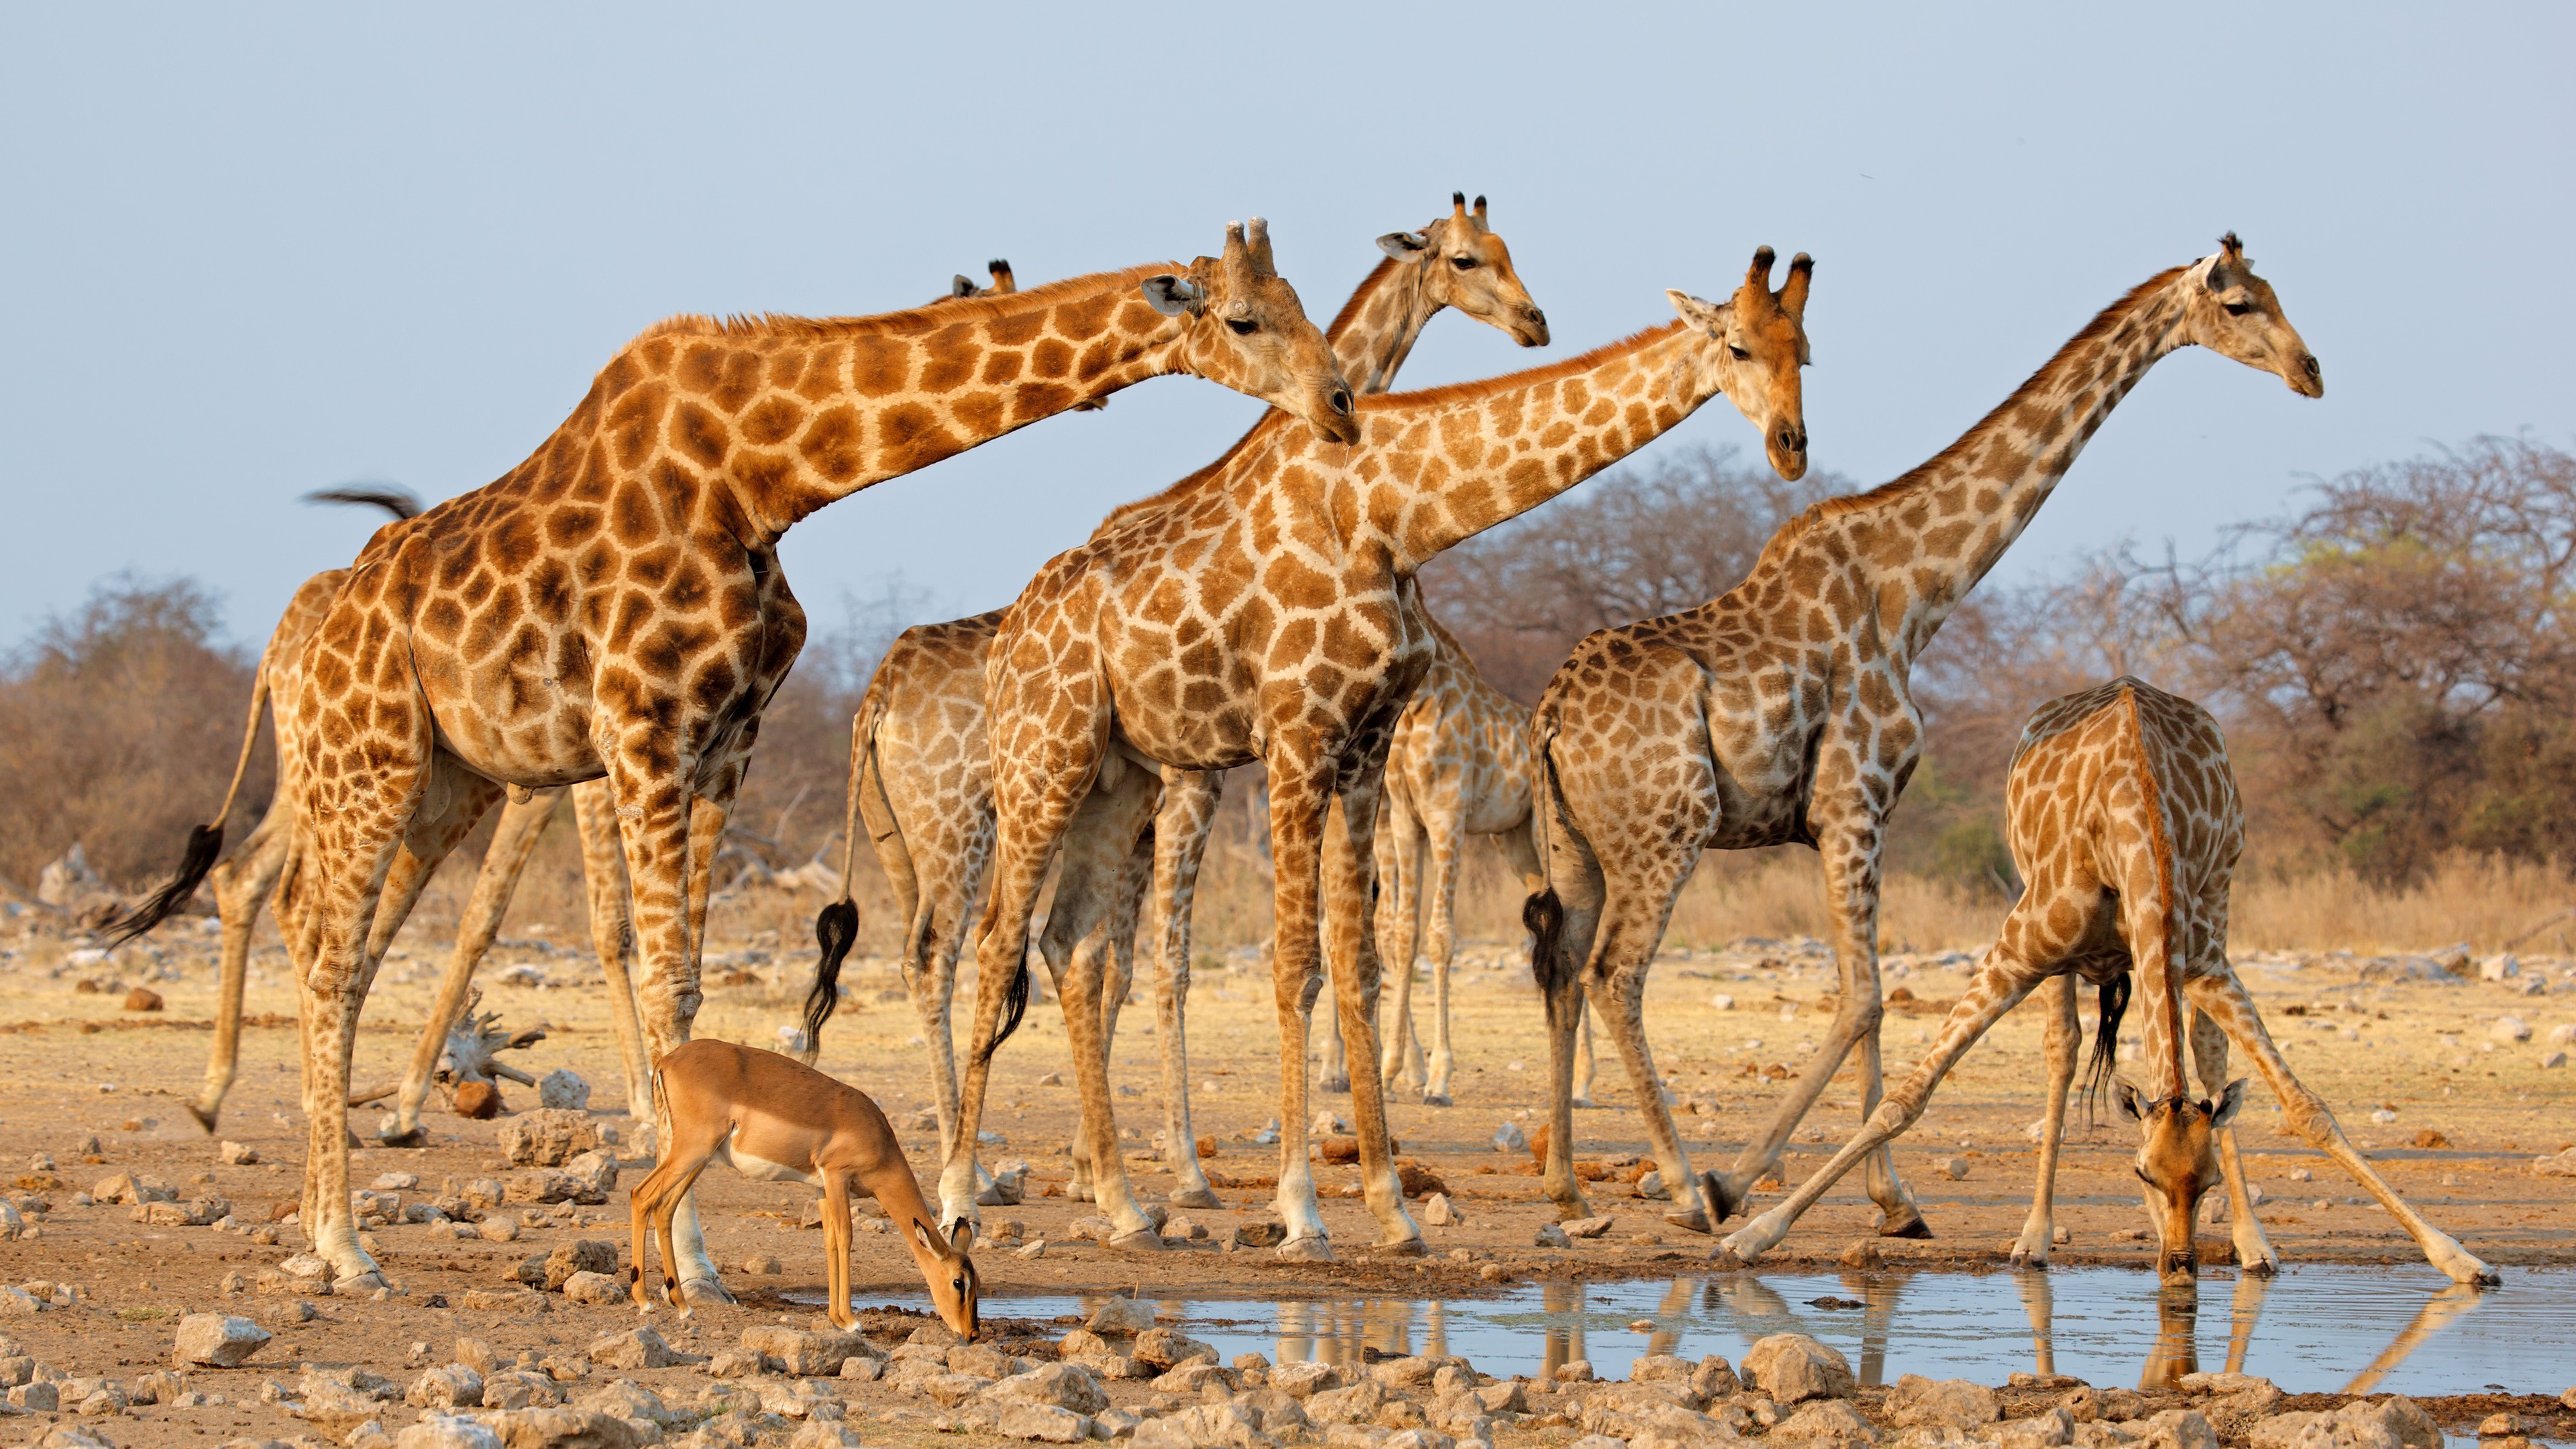 Wallpaper Giraffes, drink water 3840x2160 UHD 4K Picture, Image